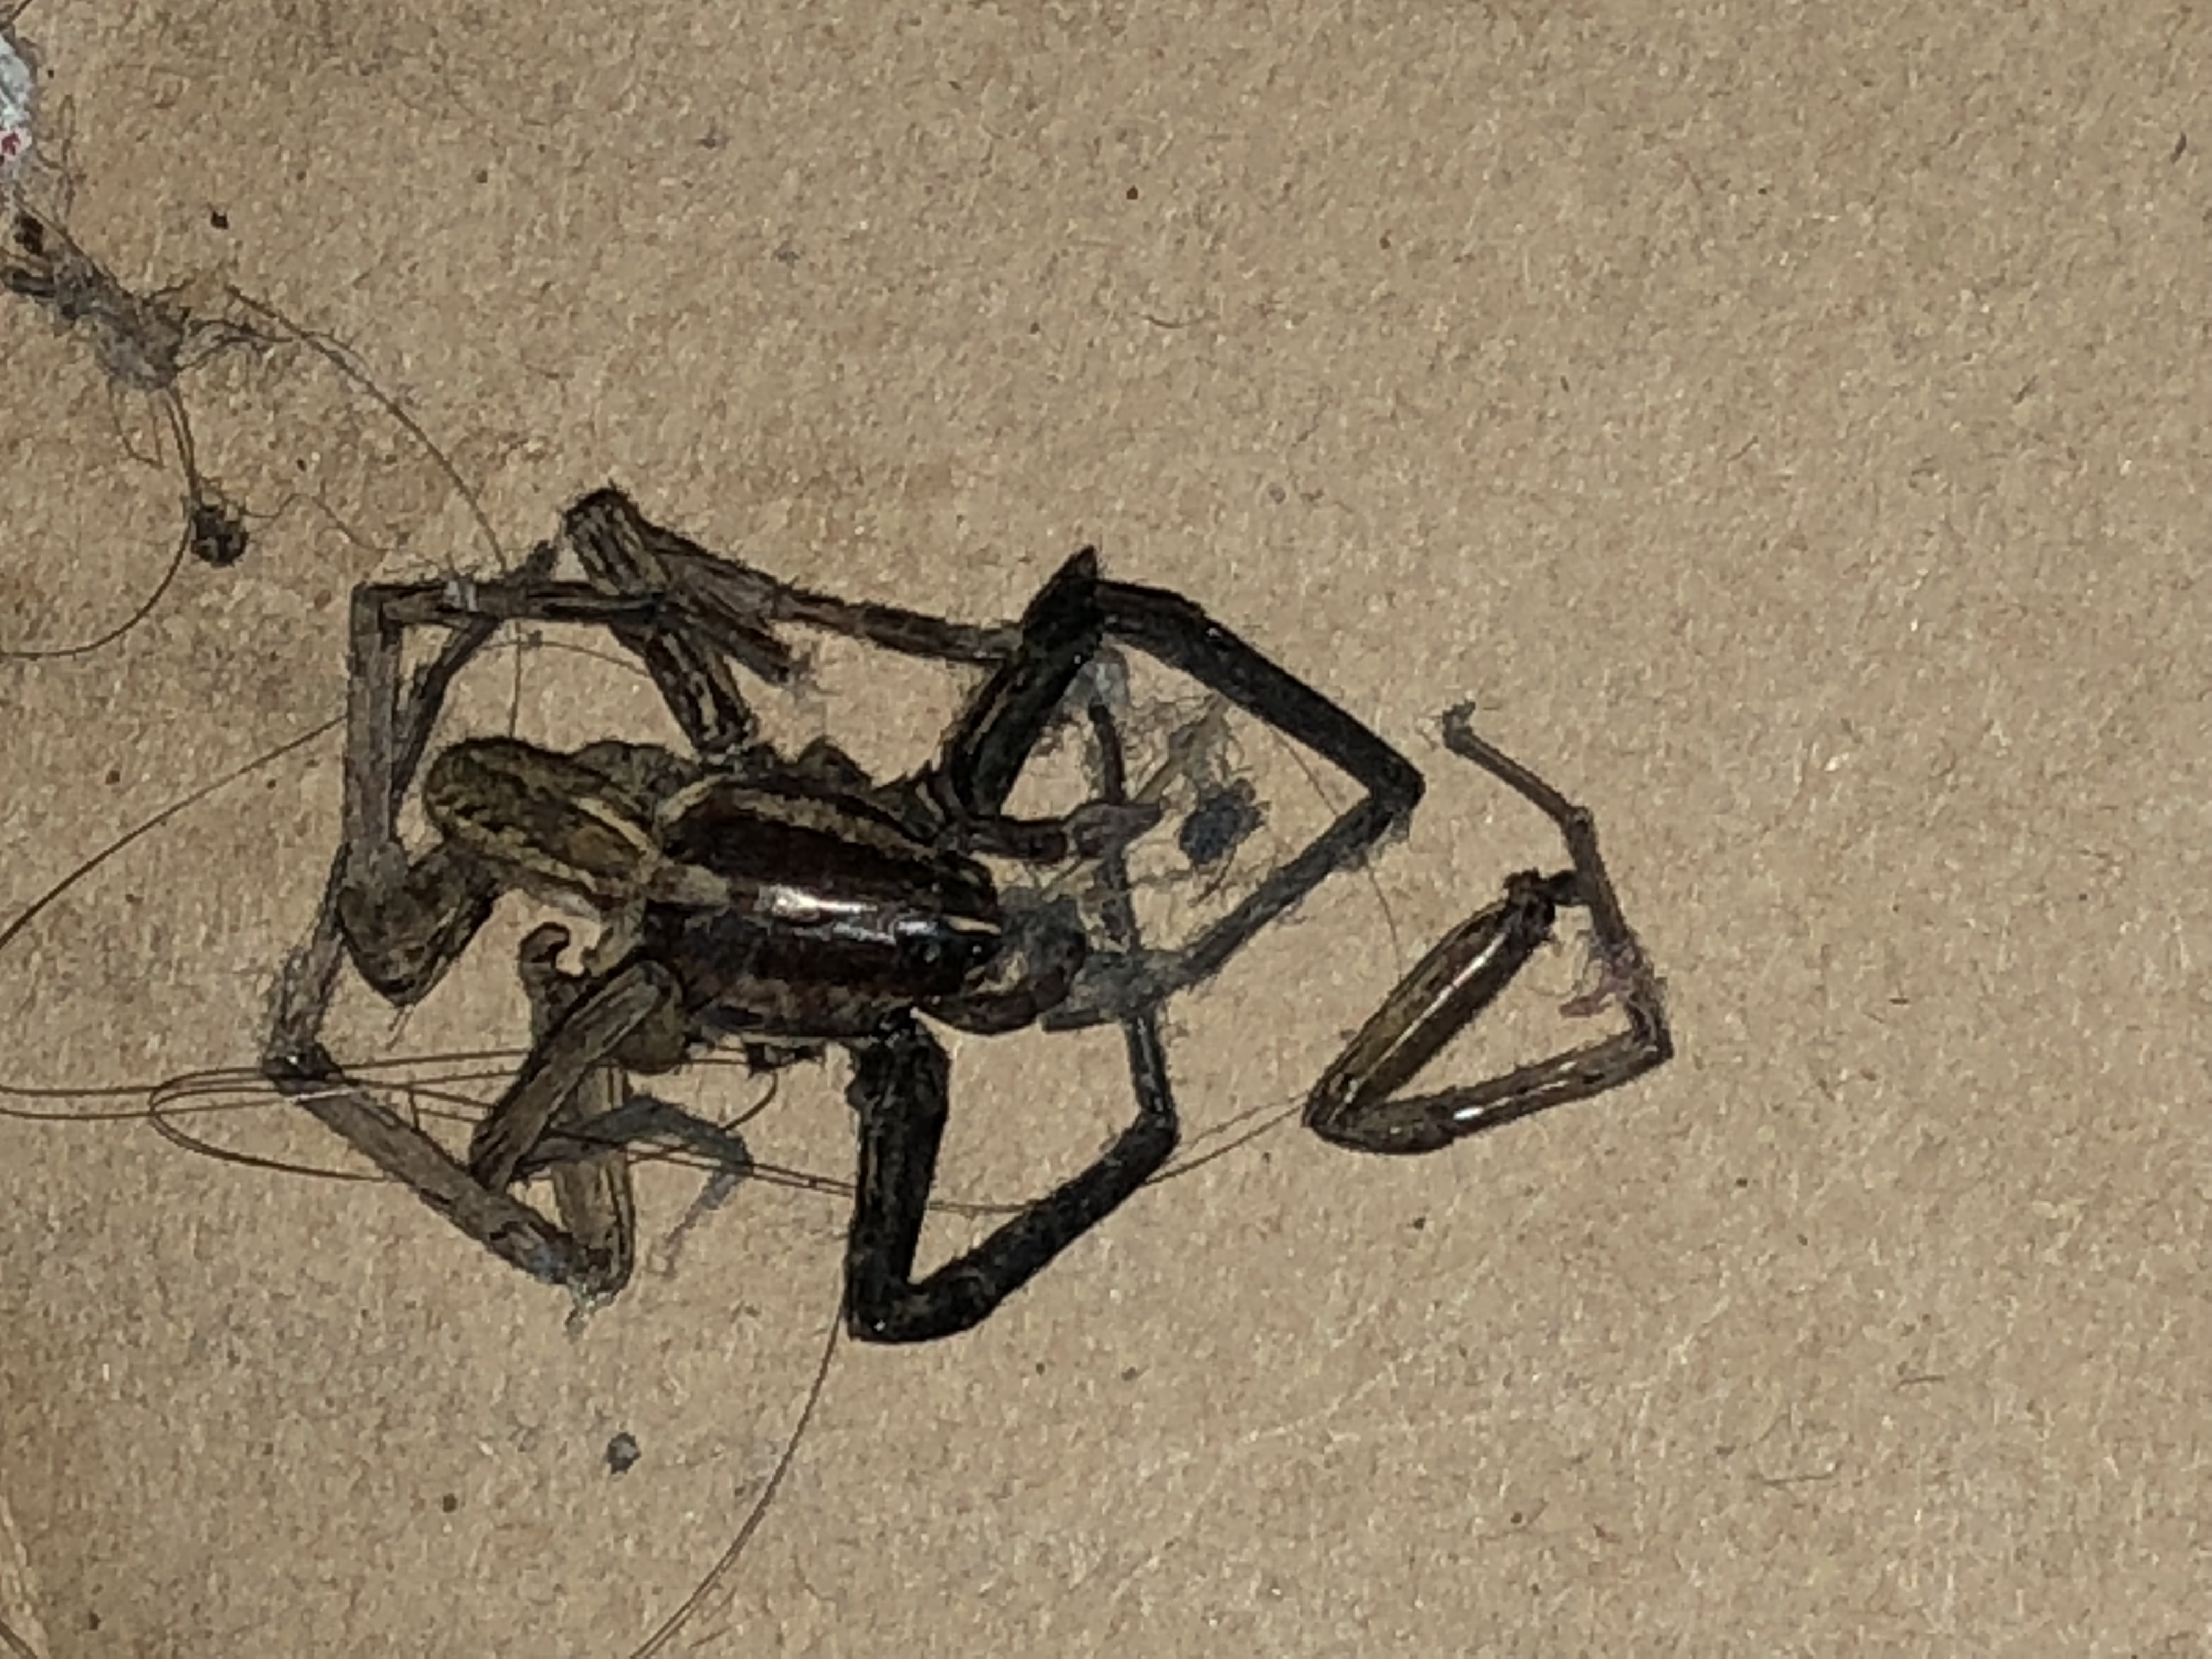 Picture of Rabidosa rabida (Rabid Wolf Spider) - Dorsal